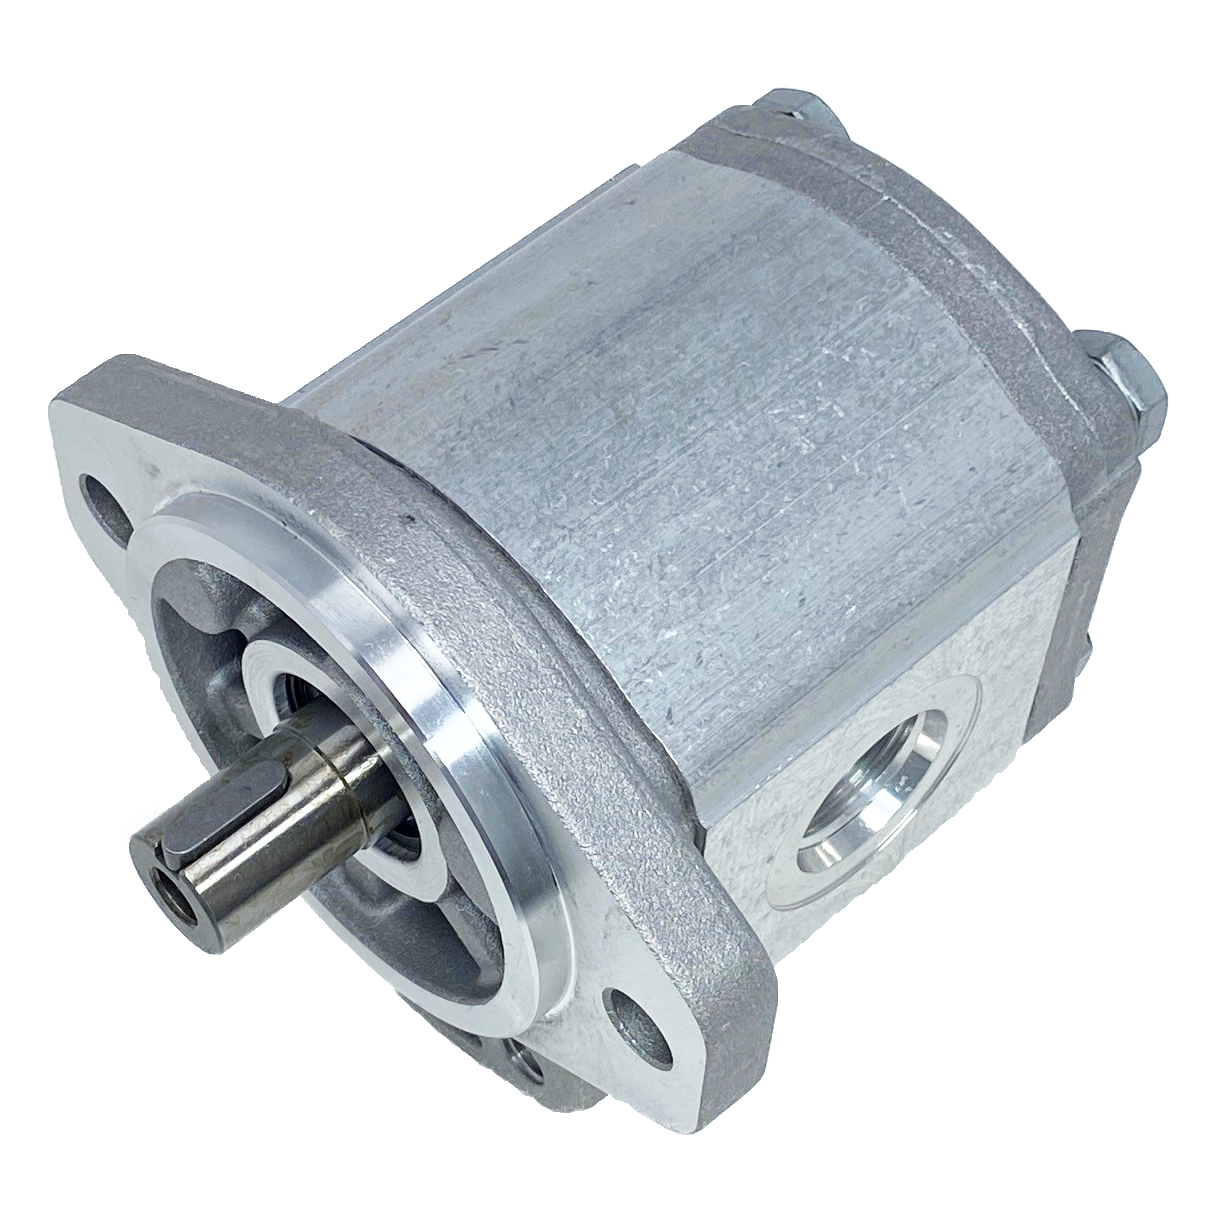 PLM20.16R0-50S1-LOC/OD-N-EL : Casappa Polaris Gear Motor, 16.85cc, 3625psi Rated, 3000RPM, Reversible Rear External Drain, 3/4" Bore x 3/16" Key Shaft, SAE A 2-Bolt Flange, 0.625 (5/8") #10 SAE Inlet, 0.75 (3/4") #12 SAE Outlet, Aluminum Body & Flange